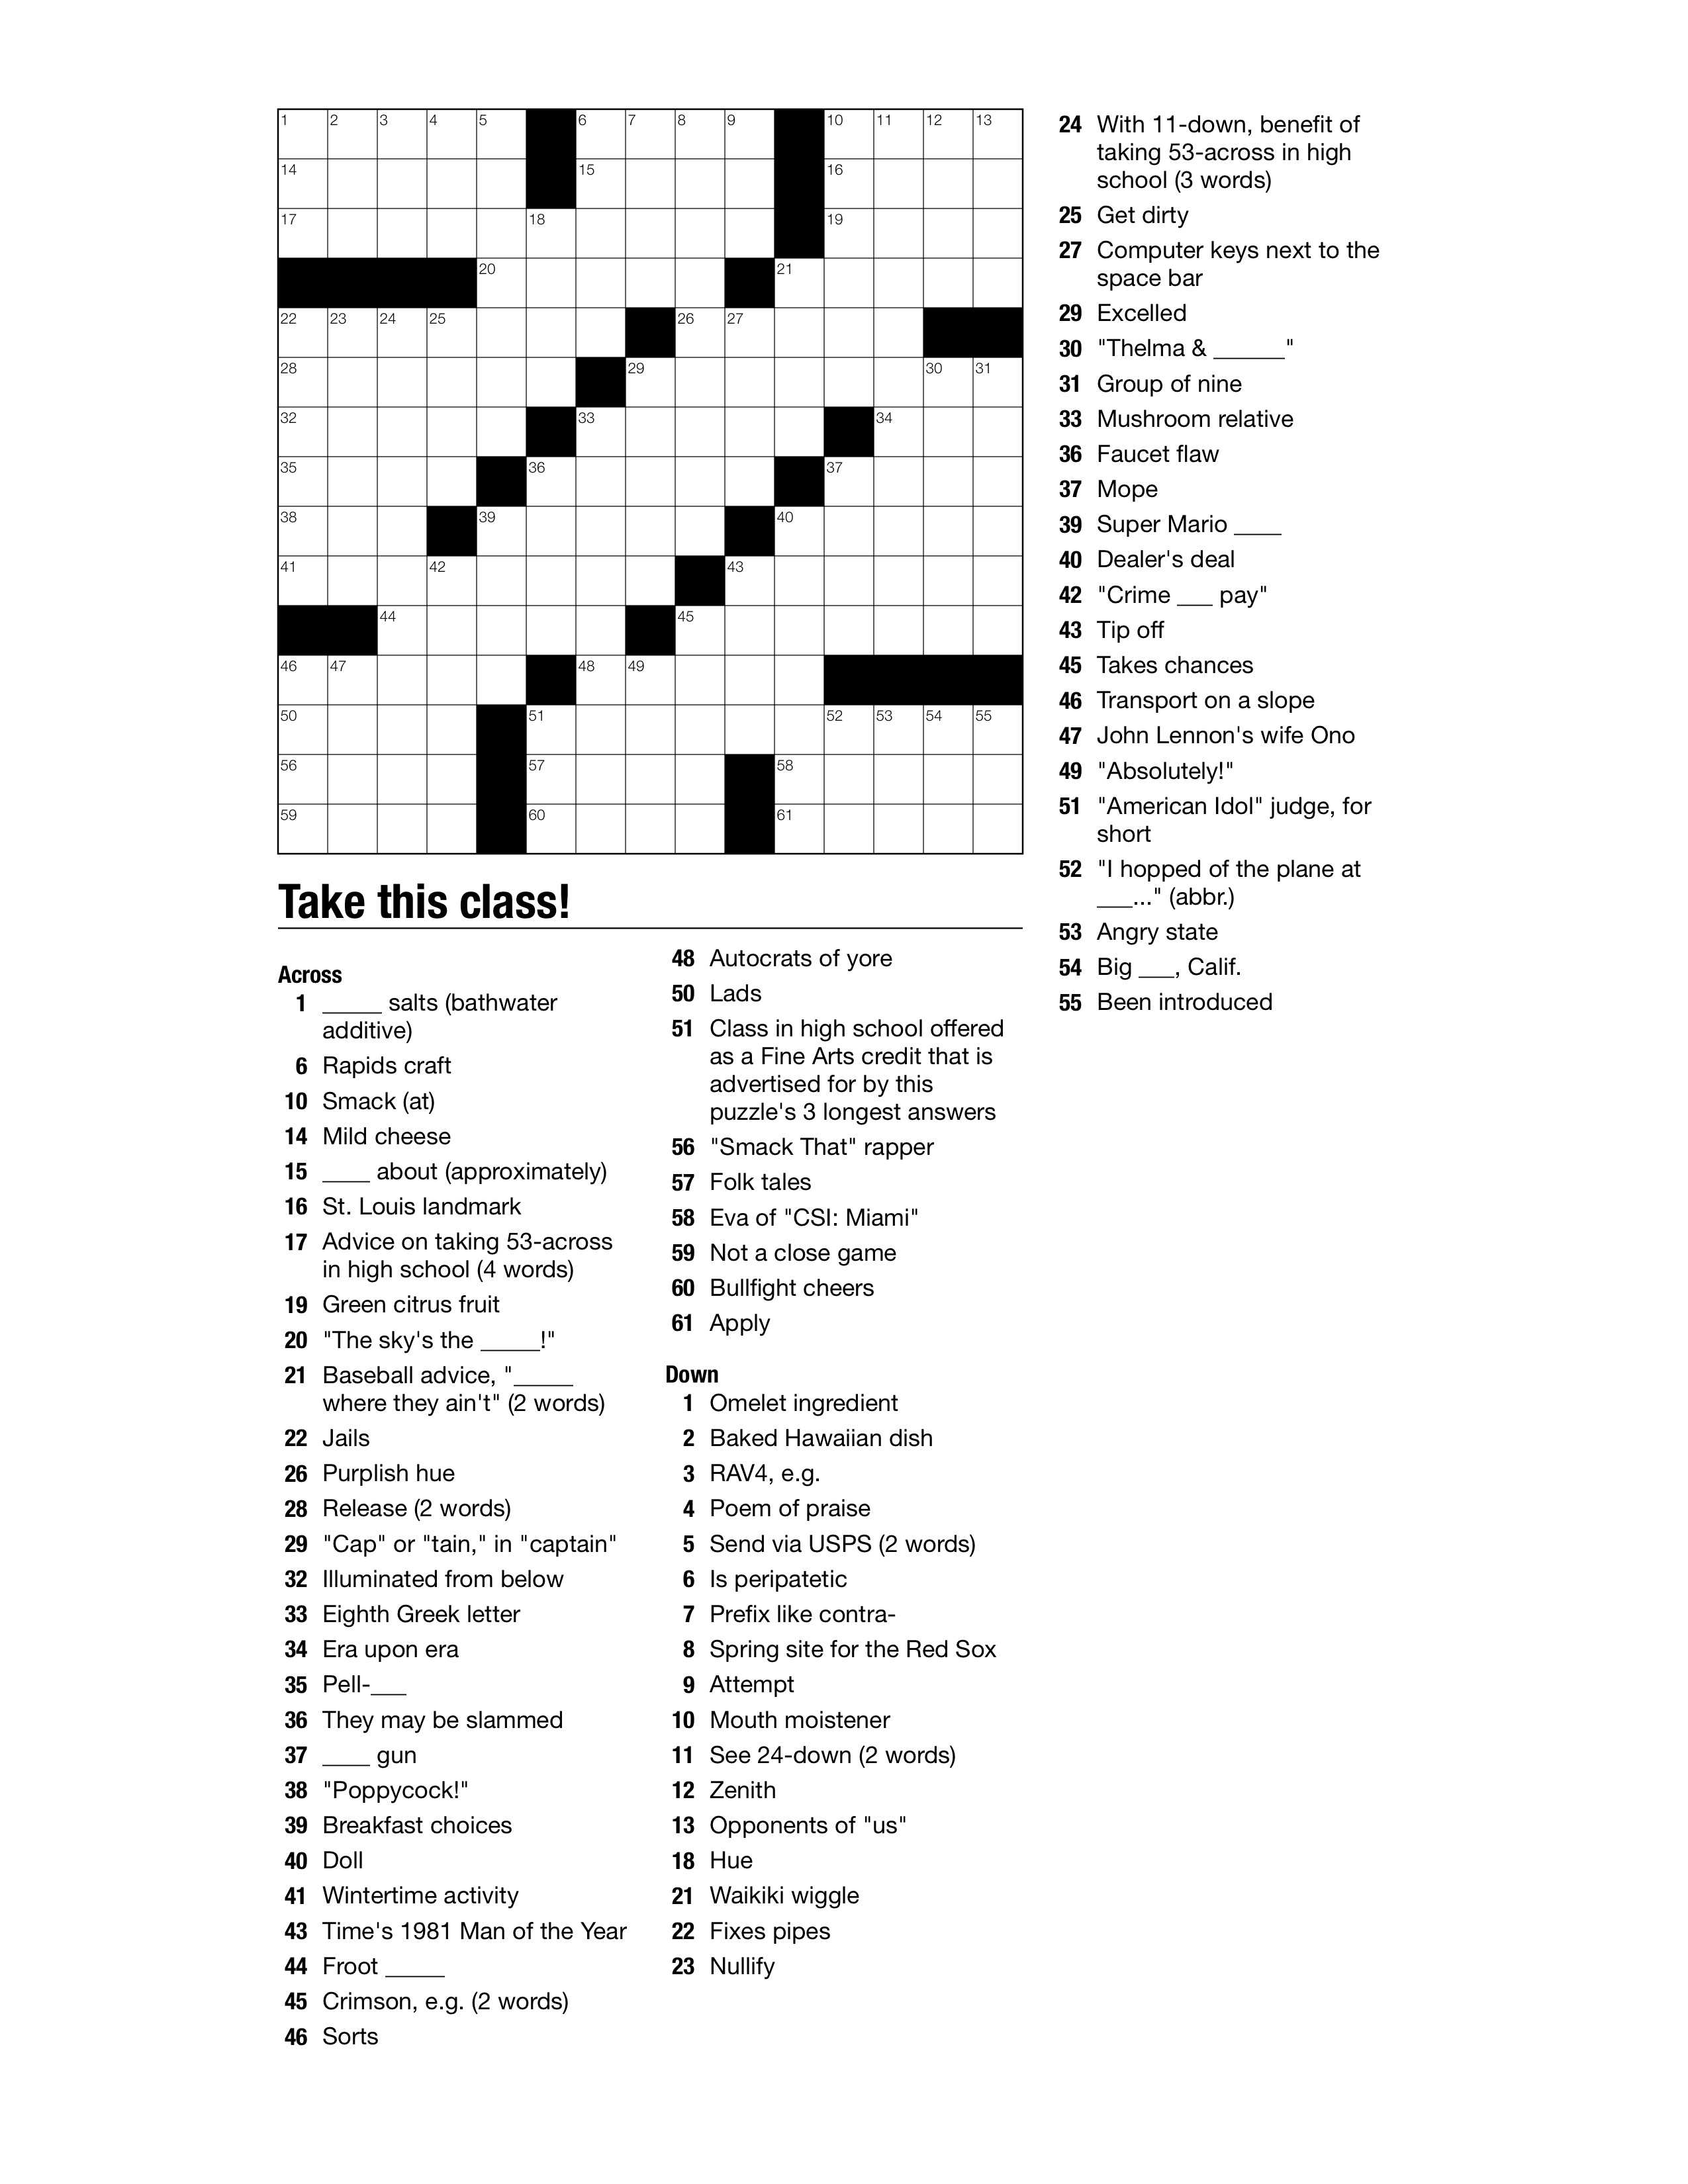 like-mud-color-wise-crossword